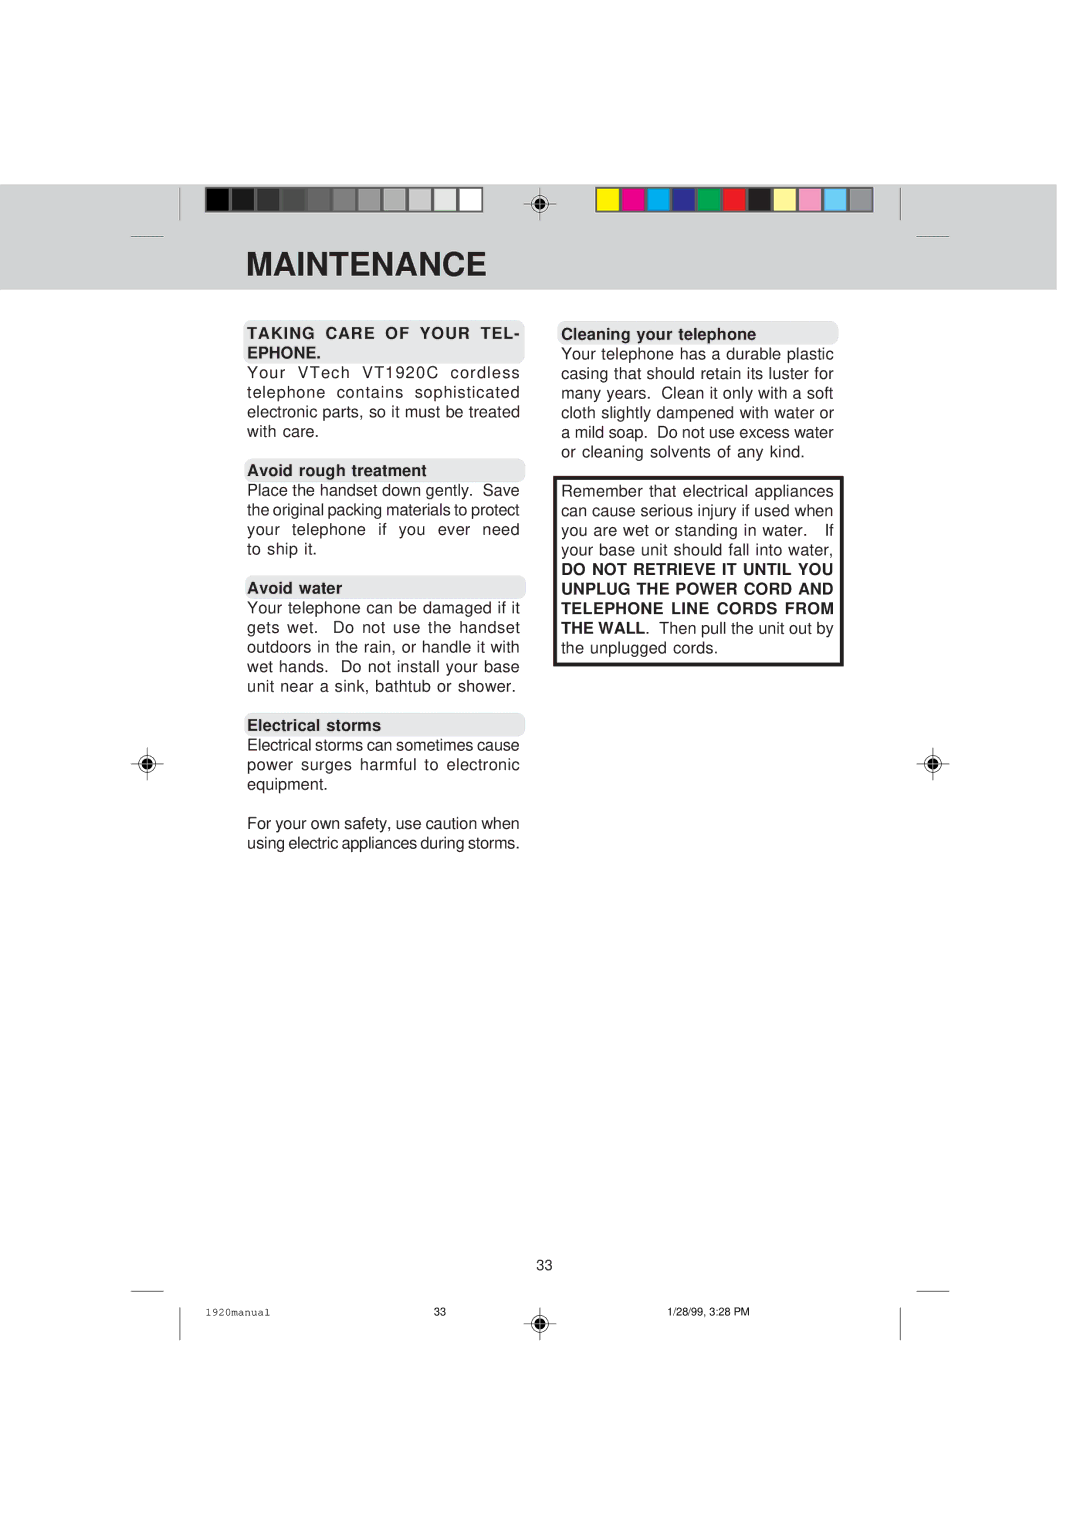 VTech VT 1920C manual Maintenance, Taking Care of Your TEL- Ephone 